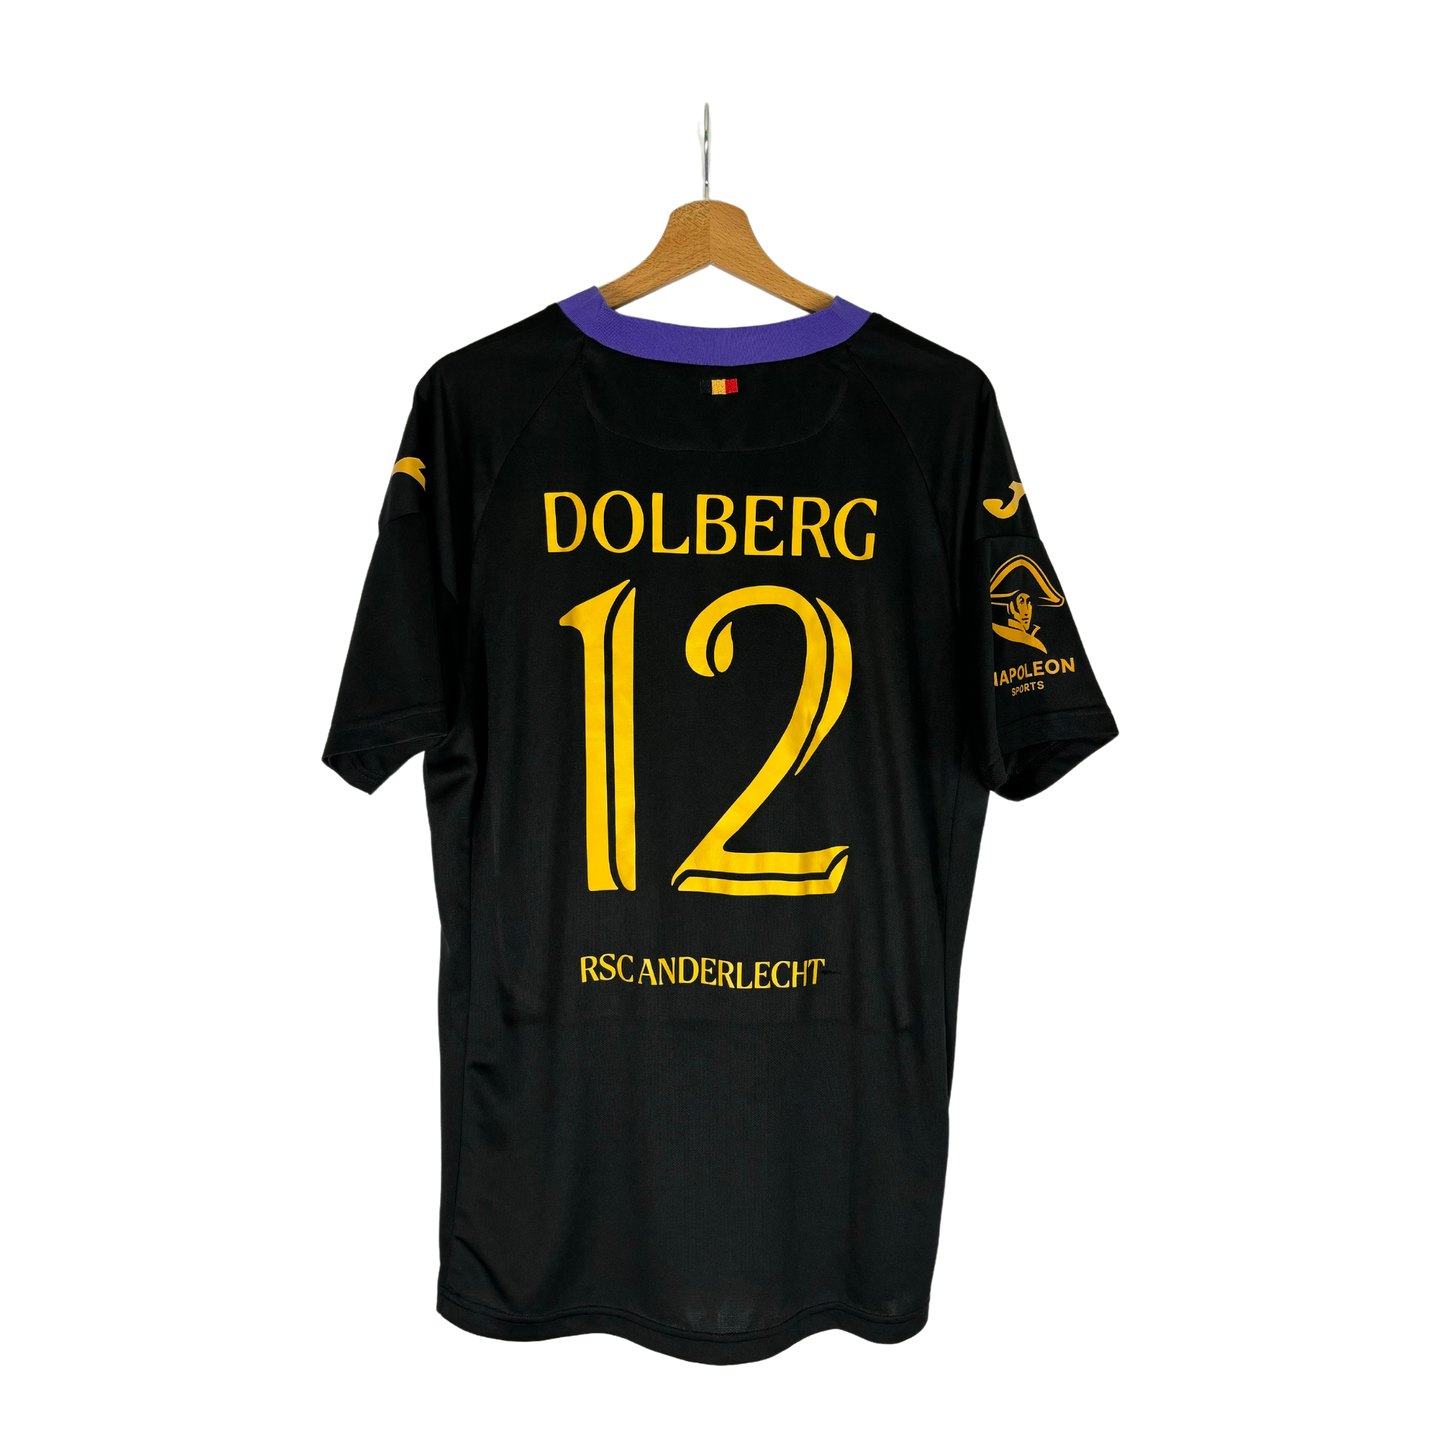 RSC Anderlecht 23/24 - Dolberg (XL)